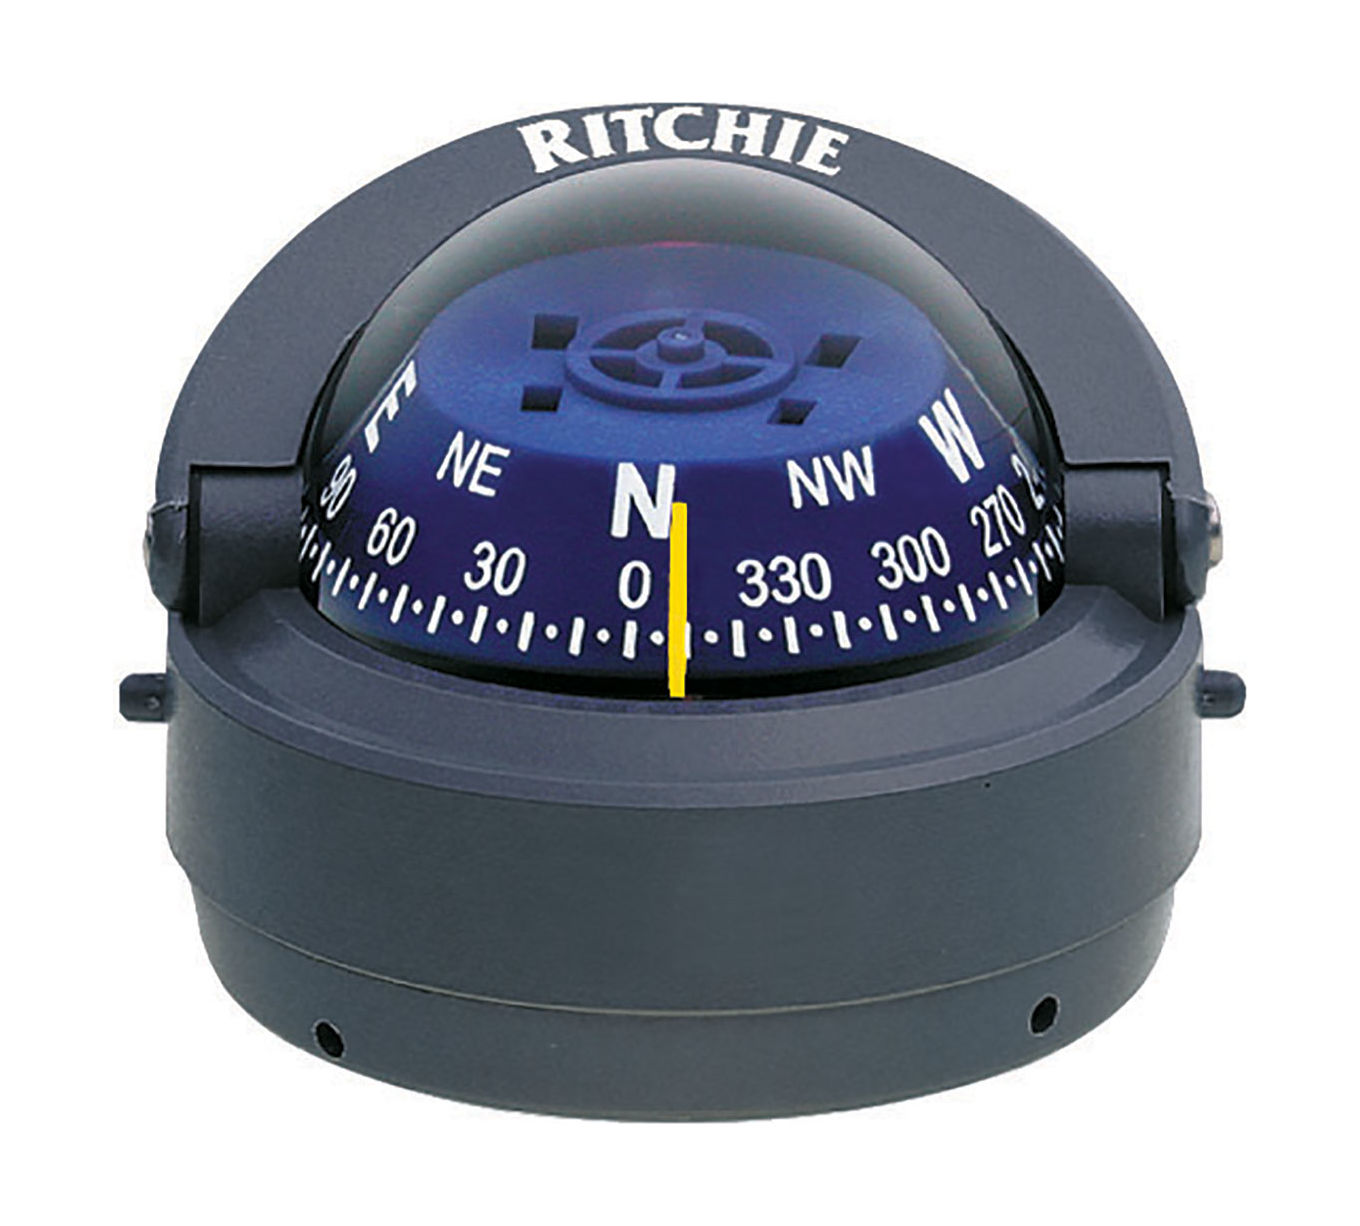 Compass s. Компас Ritchie navigation Angler ra-93. Компас Ritchie navigation Voyager b-80. Компас: g34 st13. Яхтенный компас Ritchie.